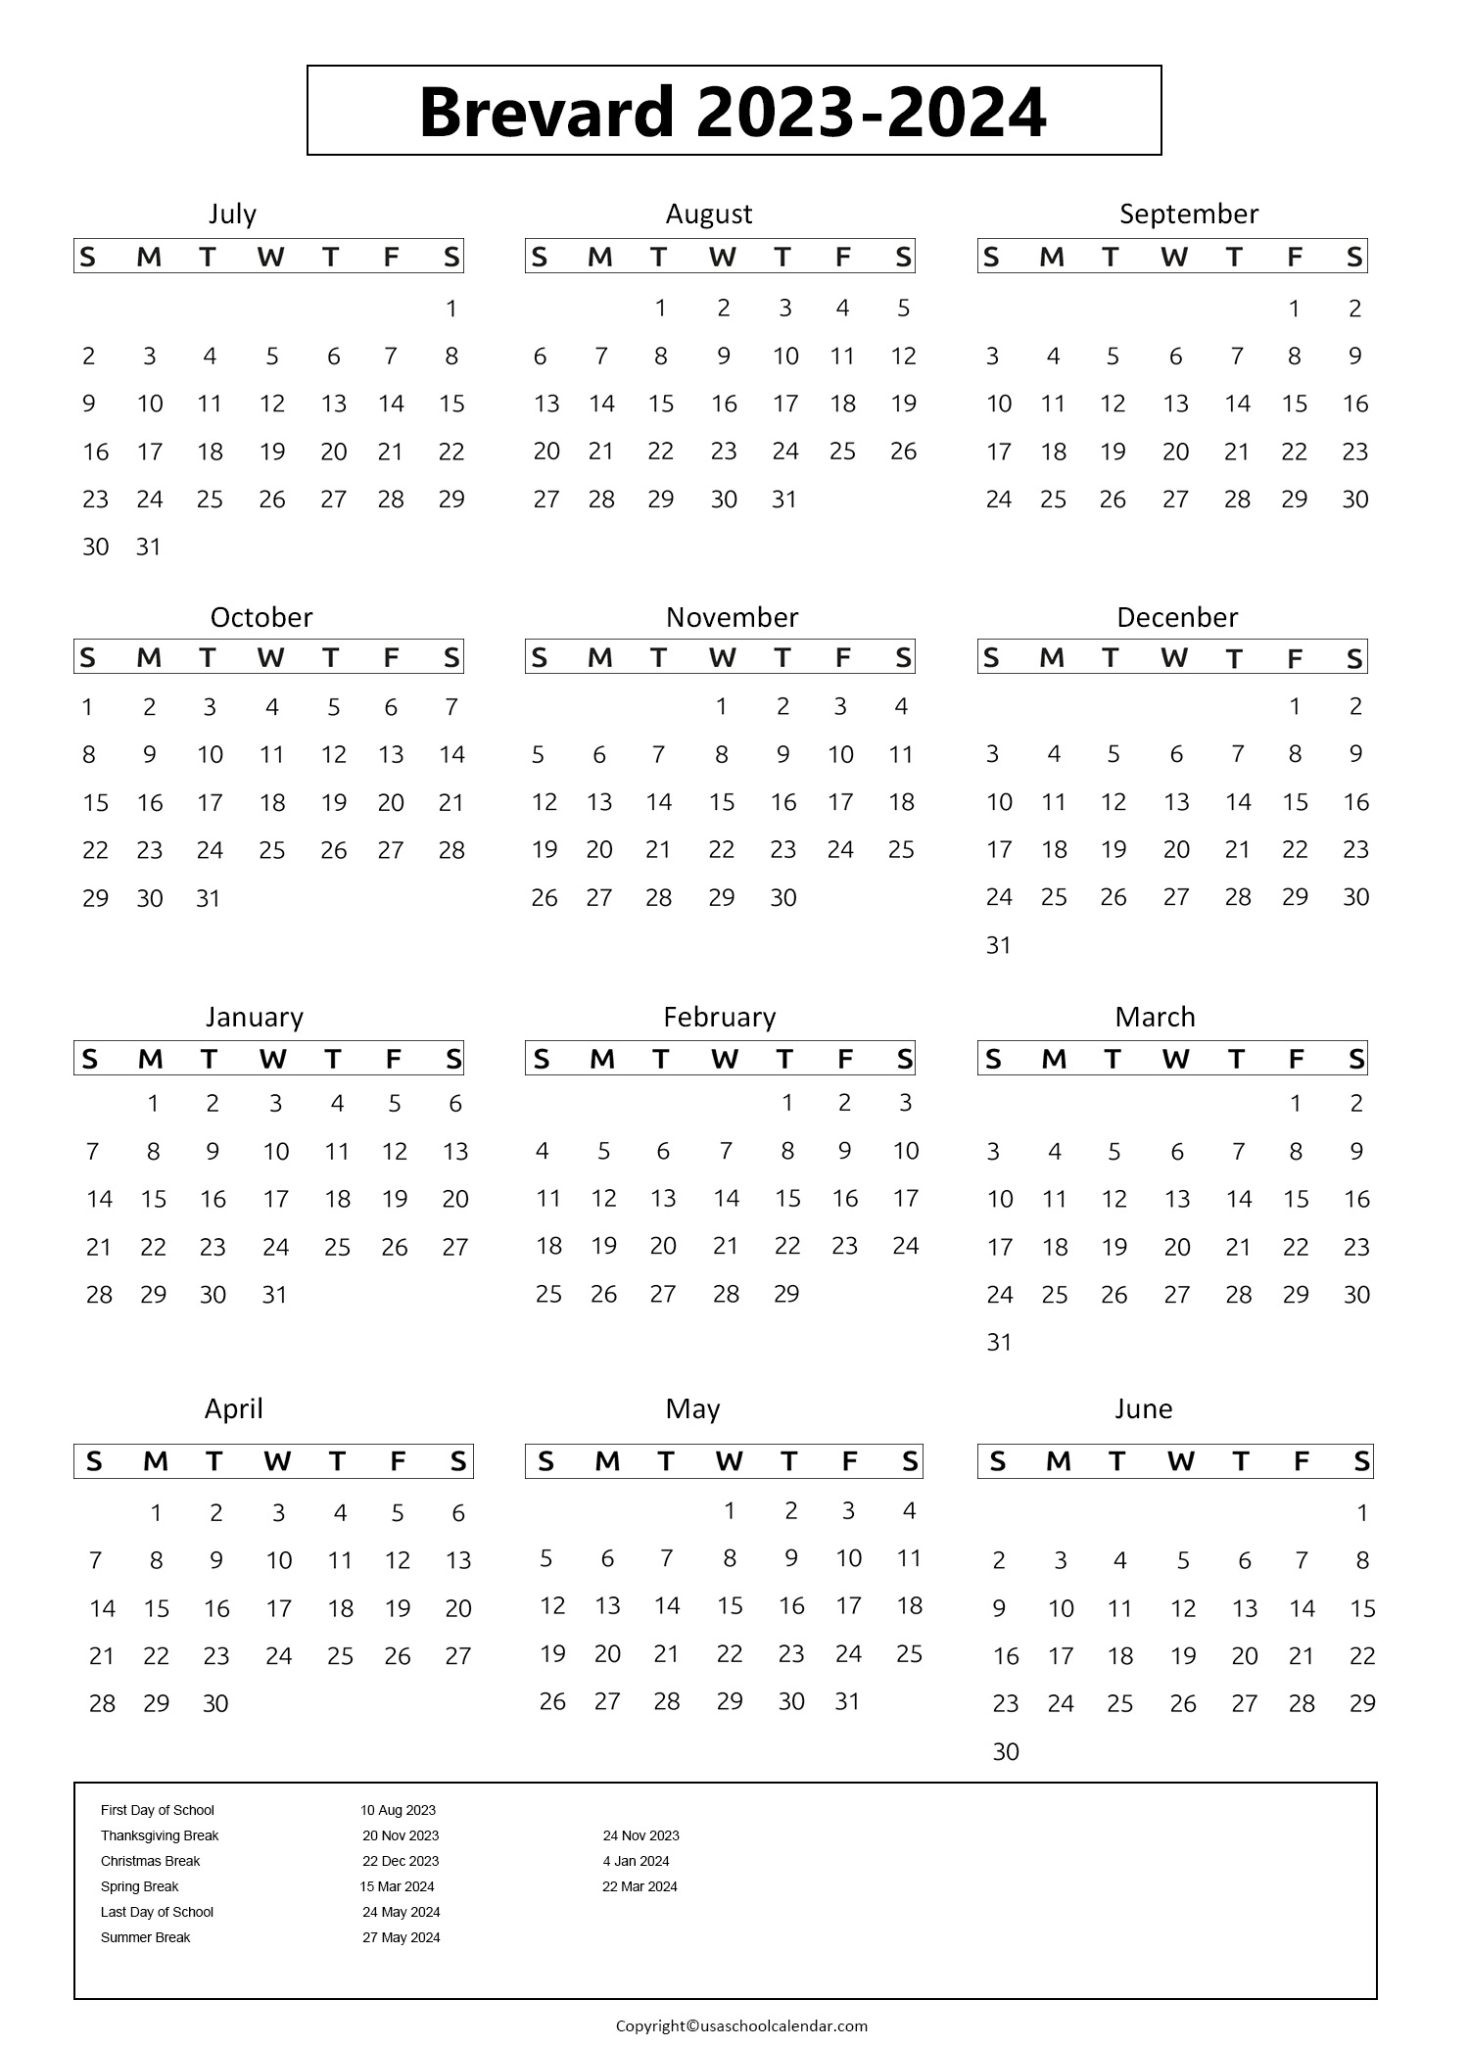 brevard-county-schools-calendar-holidays-2023-2024